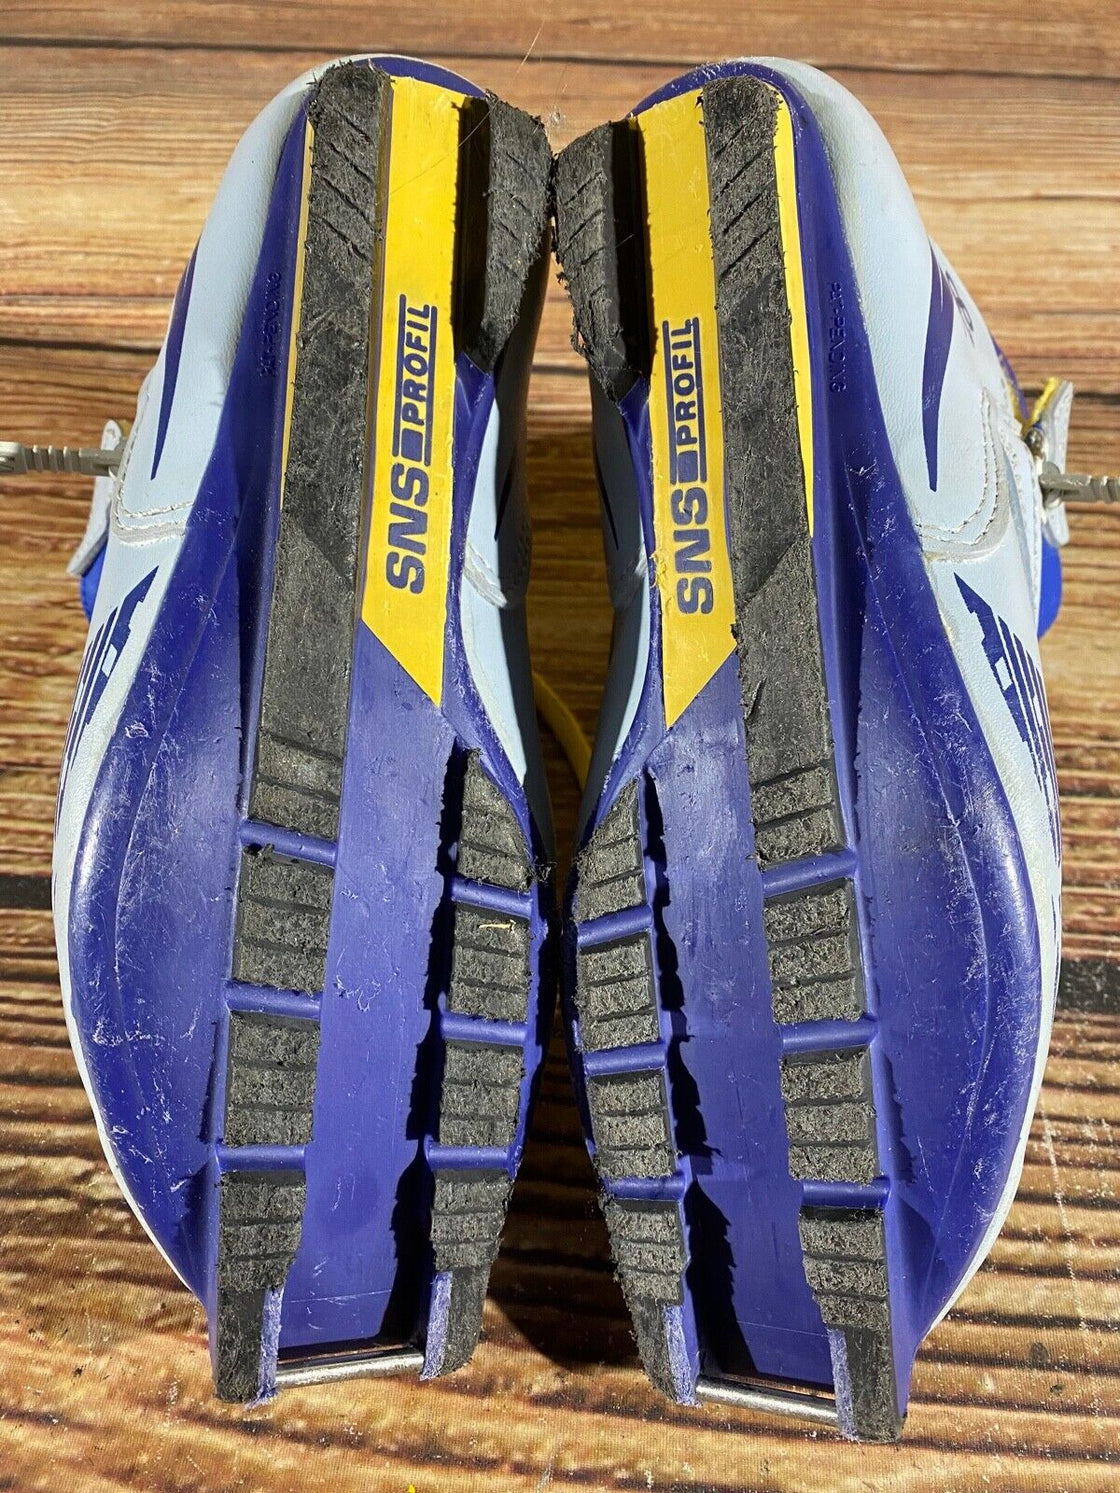 Salomon 8.1 SC Nordic Cross Country Ski Boots Size EU37 1/3 US5.5 for SNS Profil